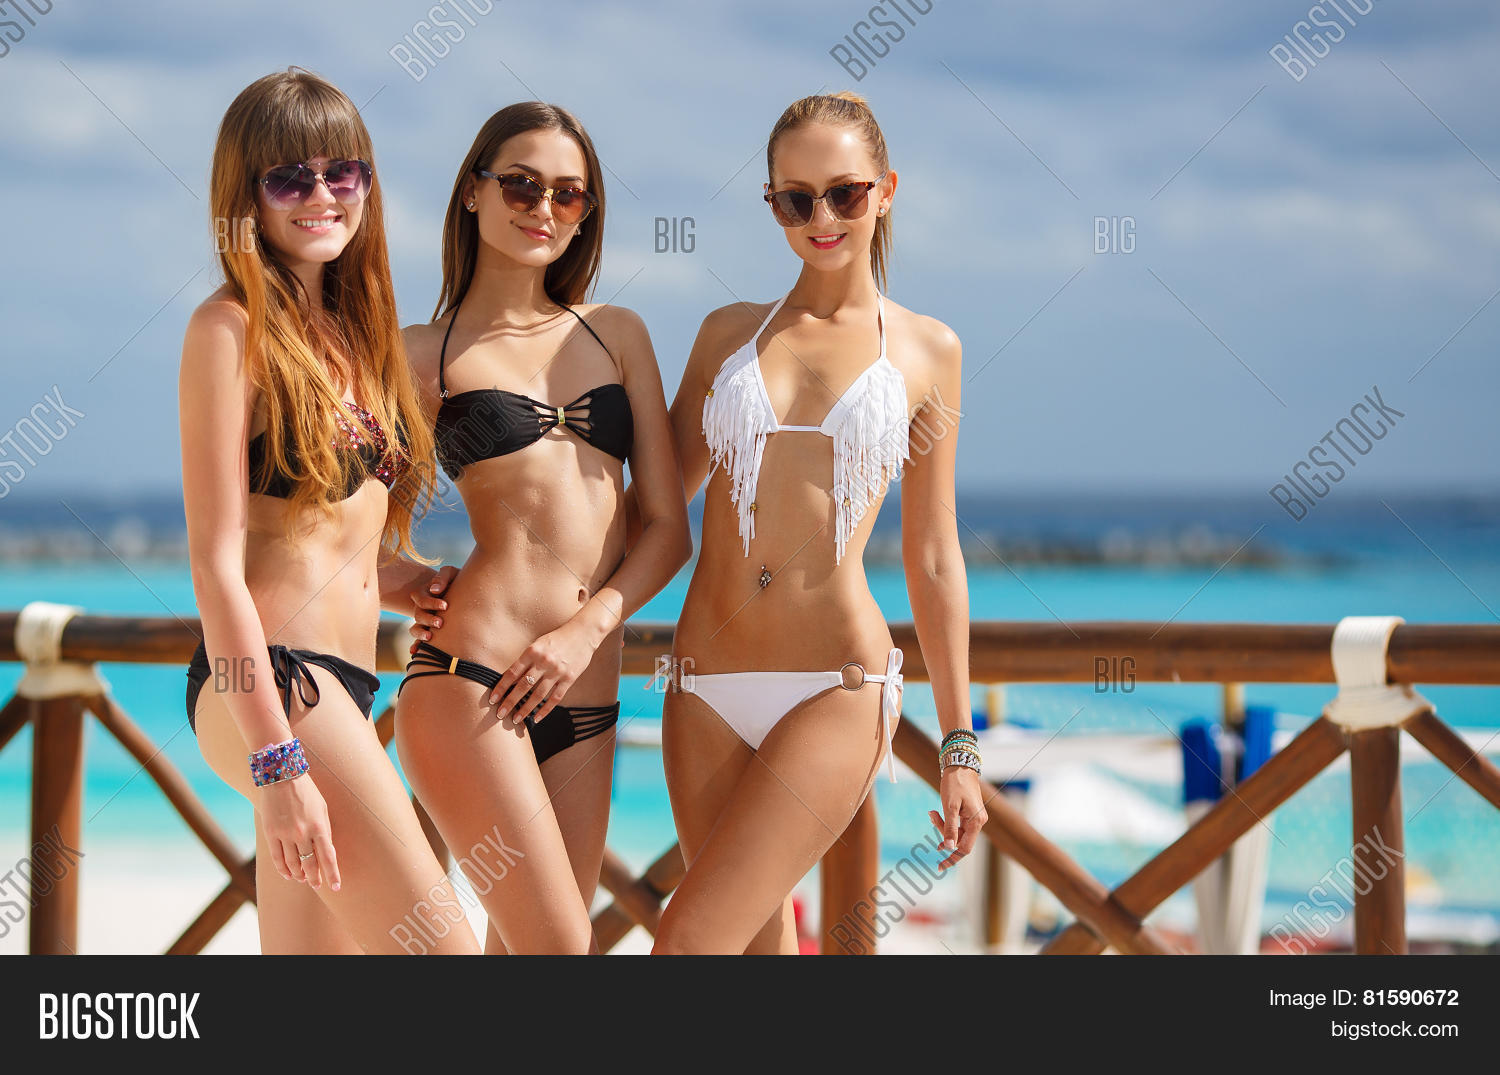 claudeth dullete recommends beautiful girls bikinis pic